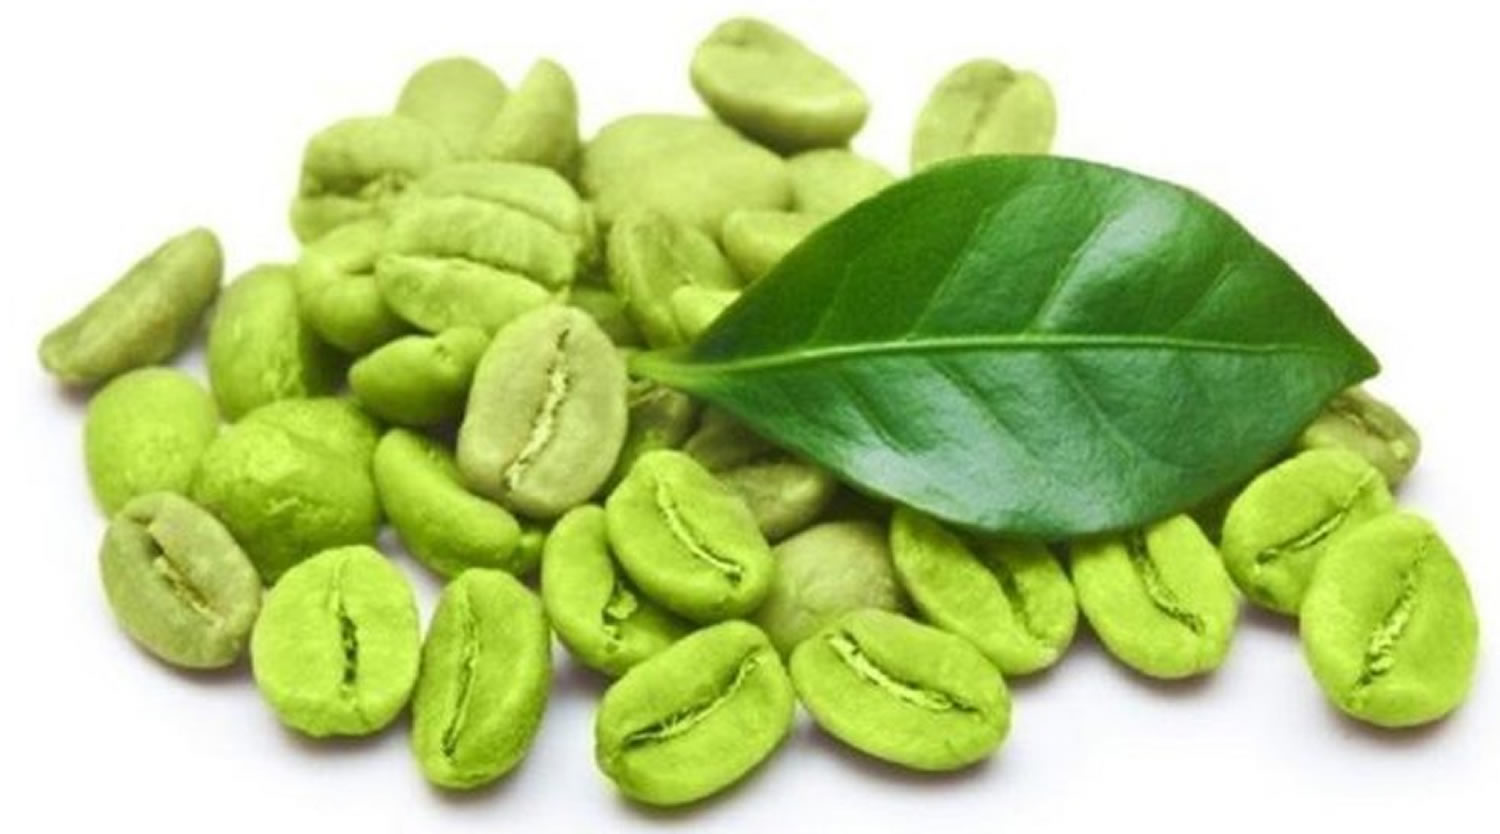 Pachet Green Coffee Extract 180 cps. la pret de 120 cps.